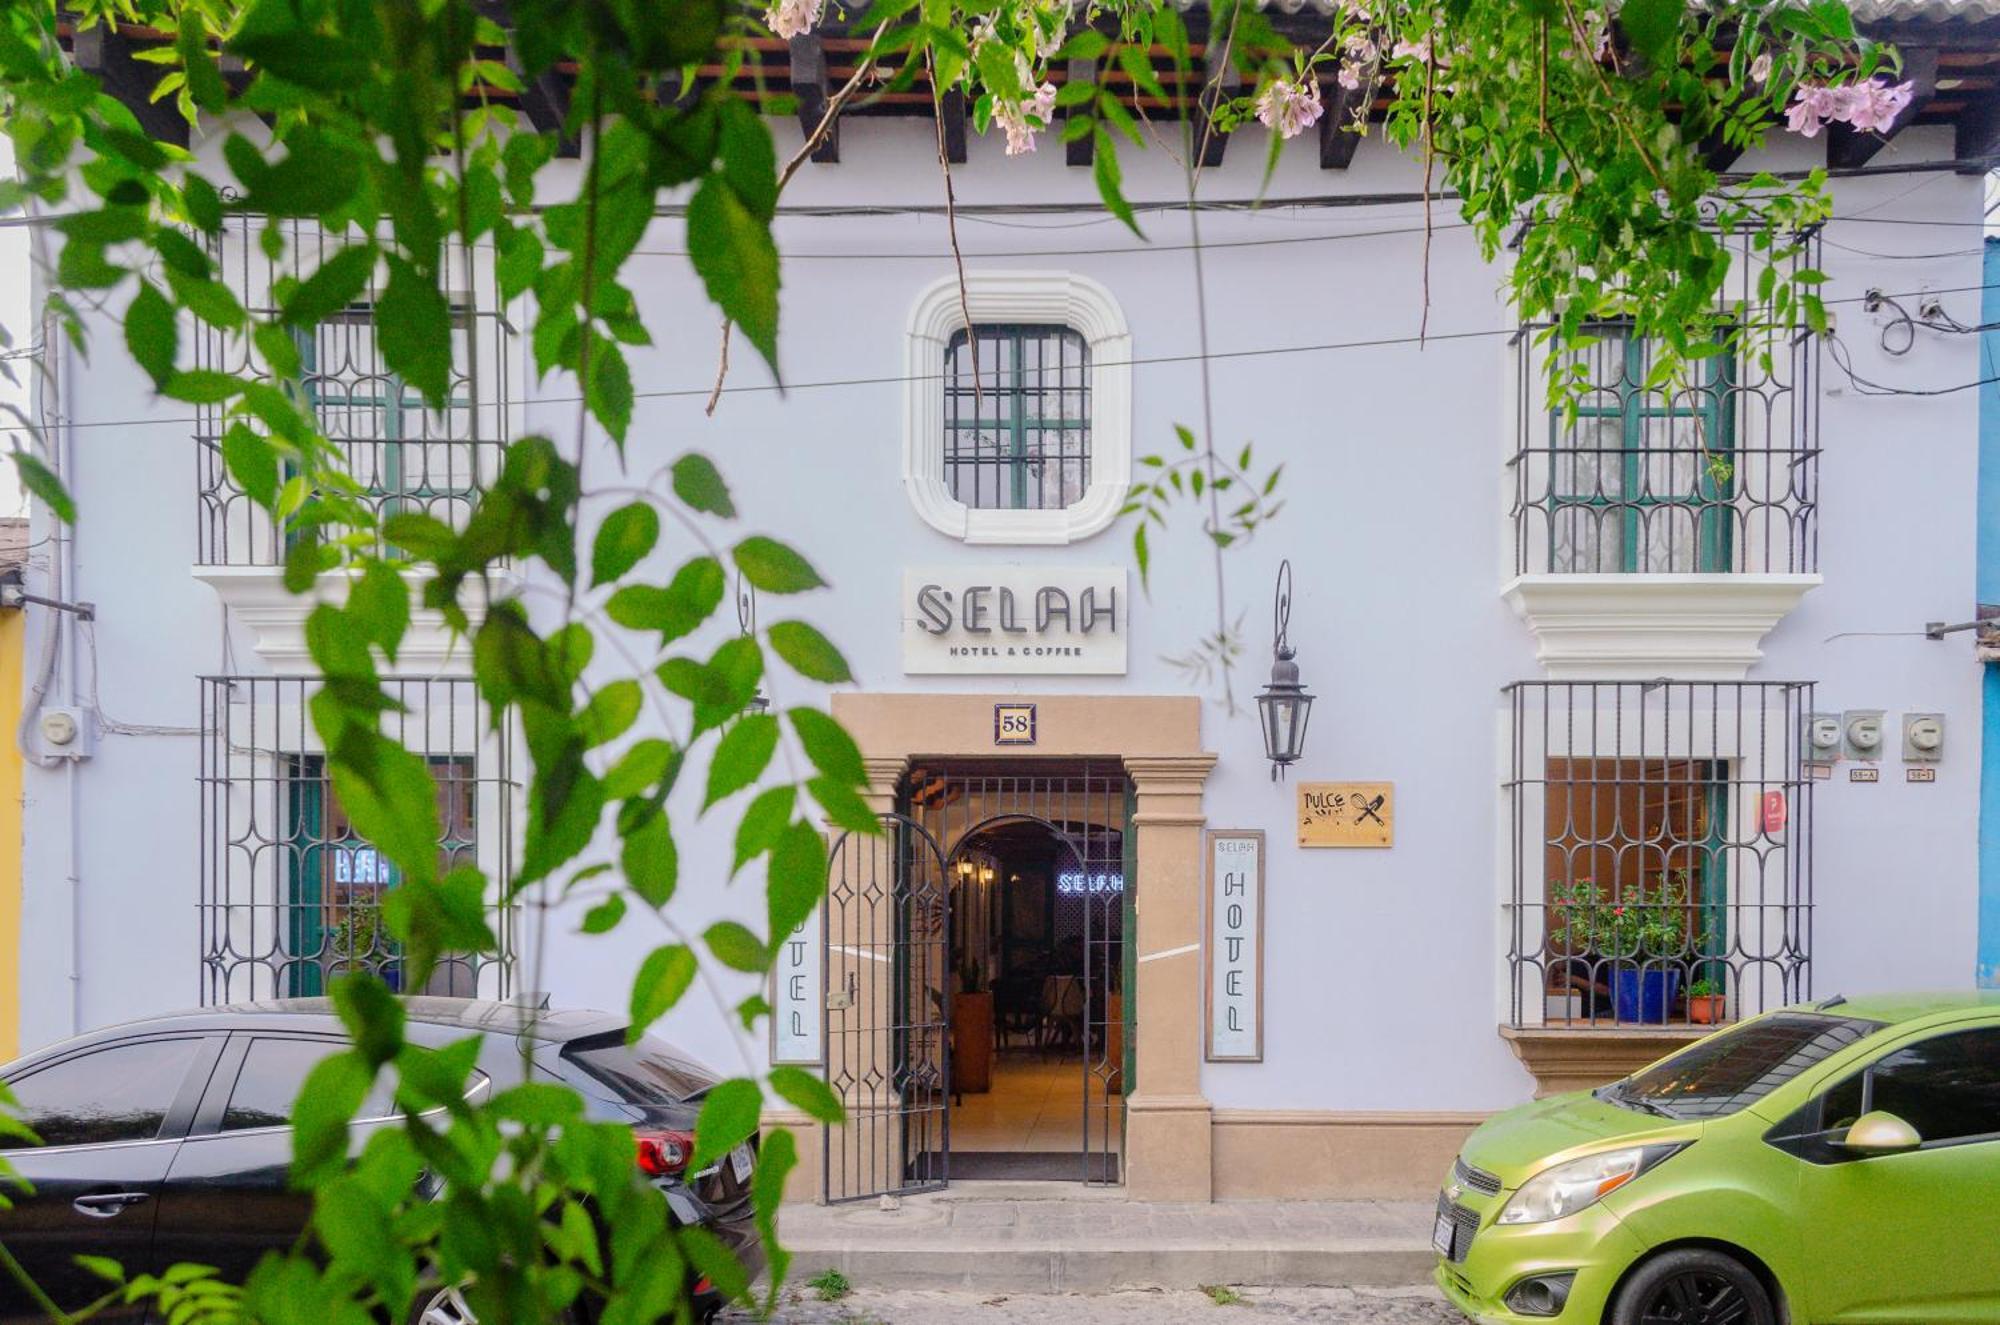 Selah Hotel & Coffee Antigua Esterno foto